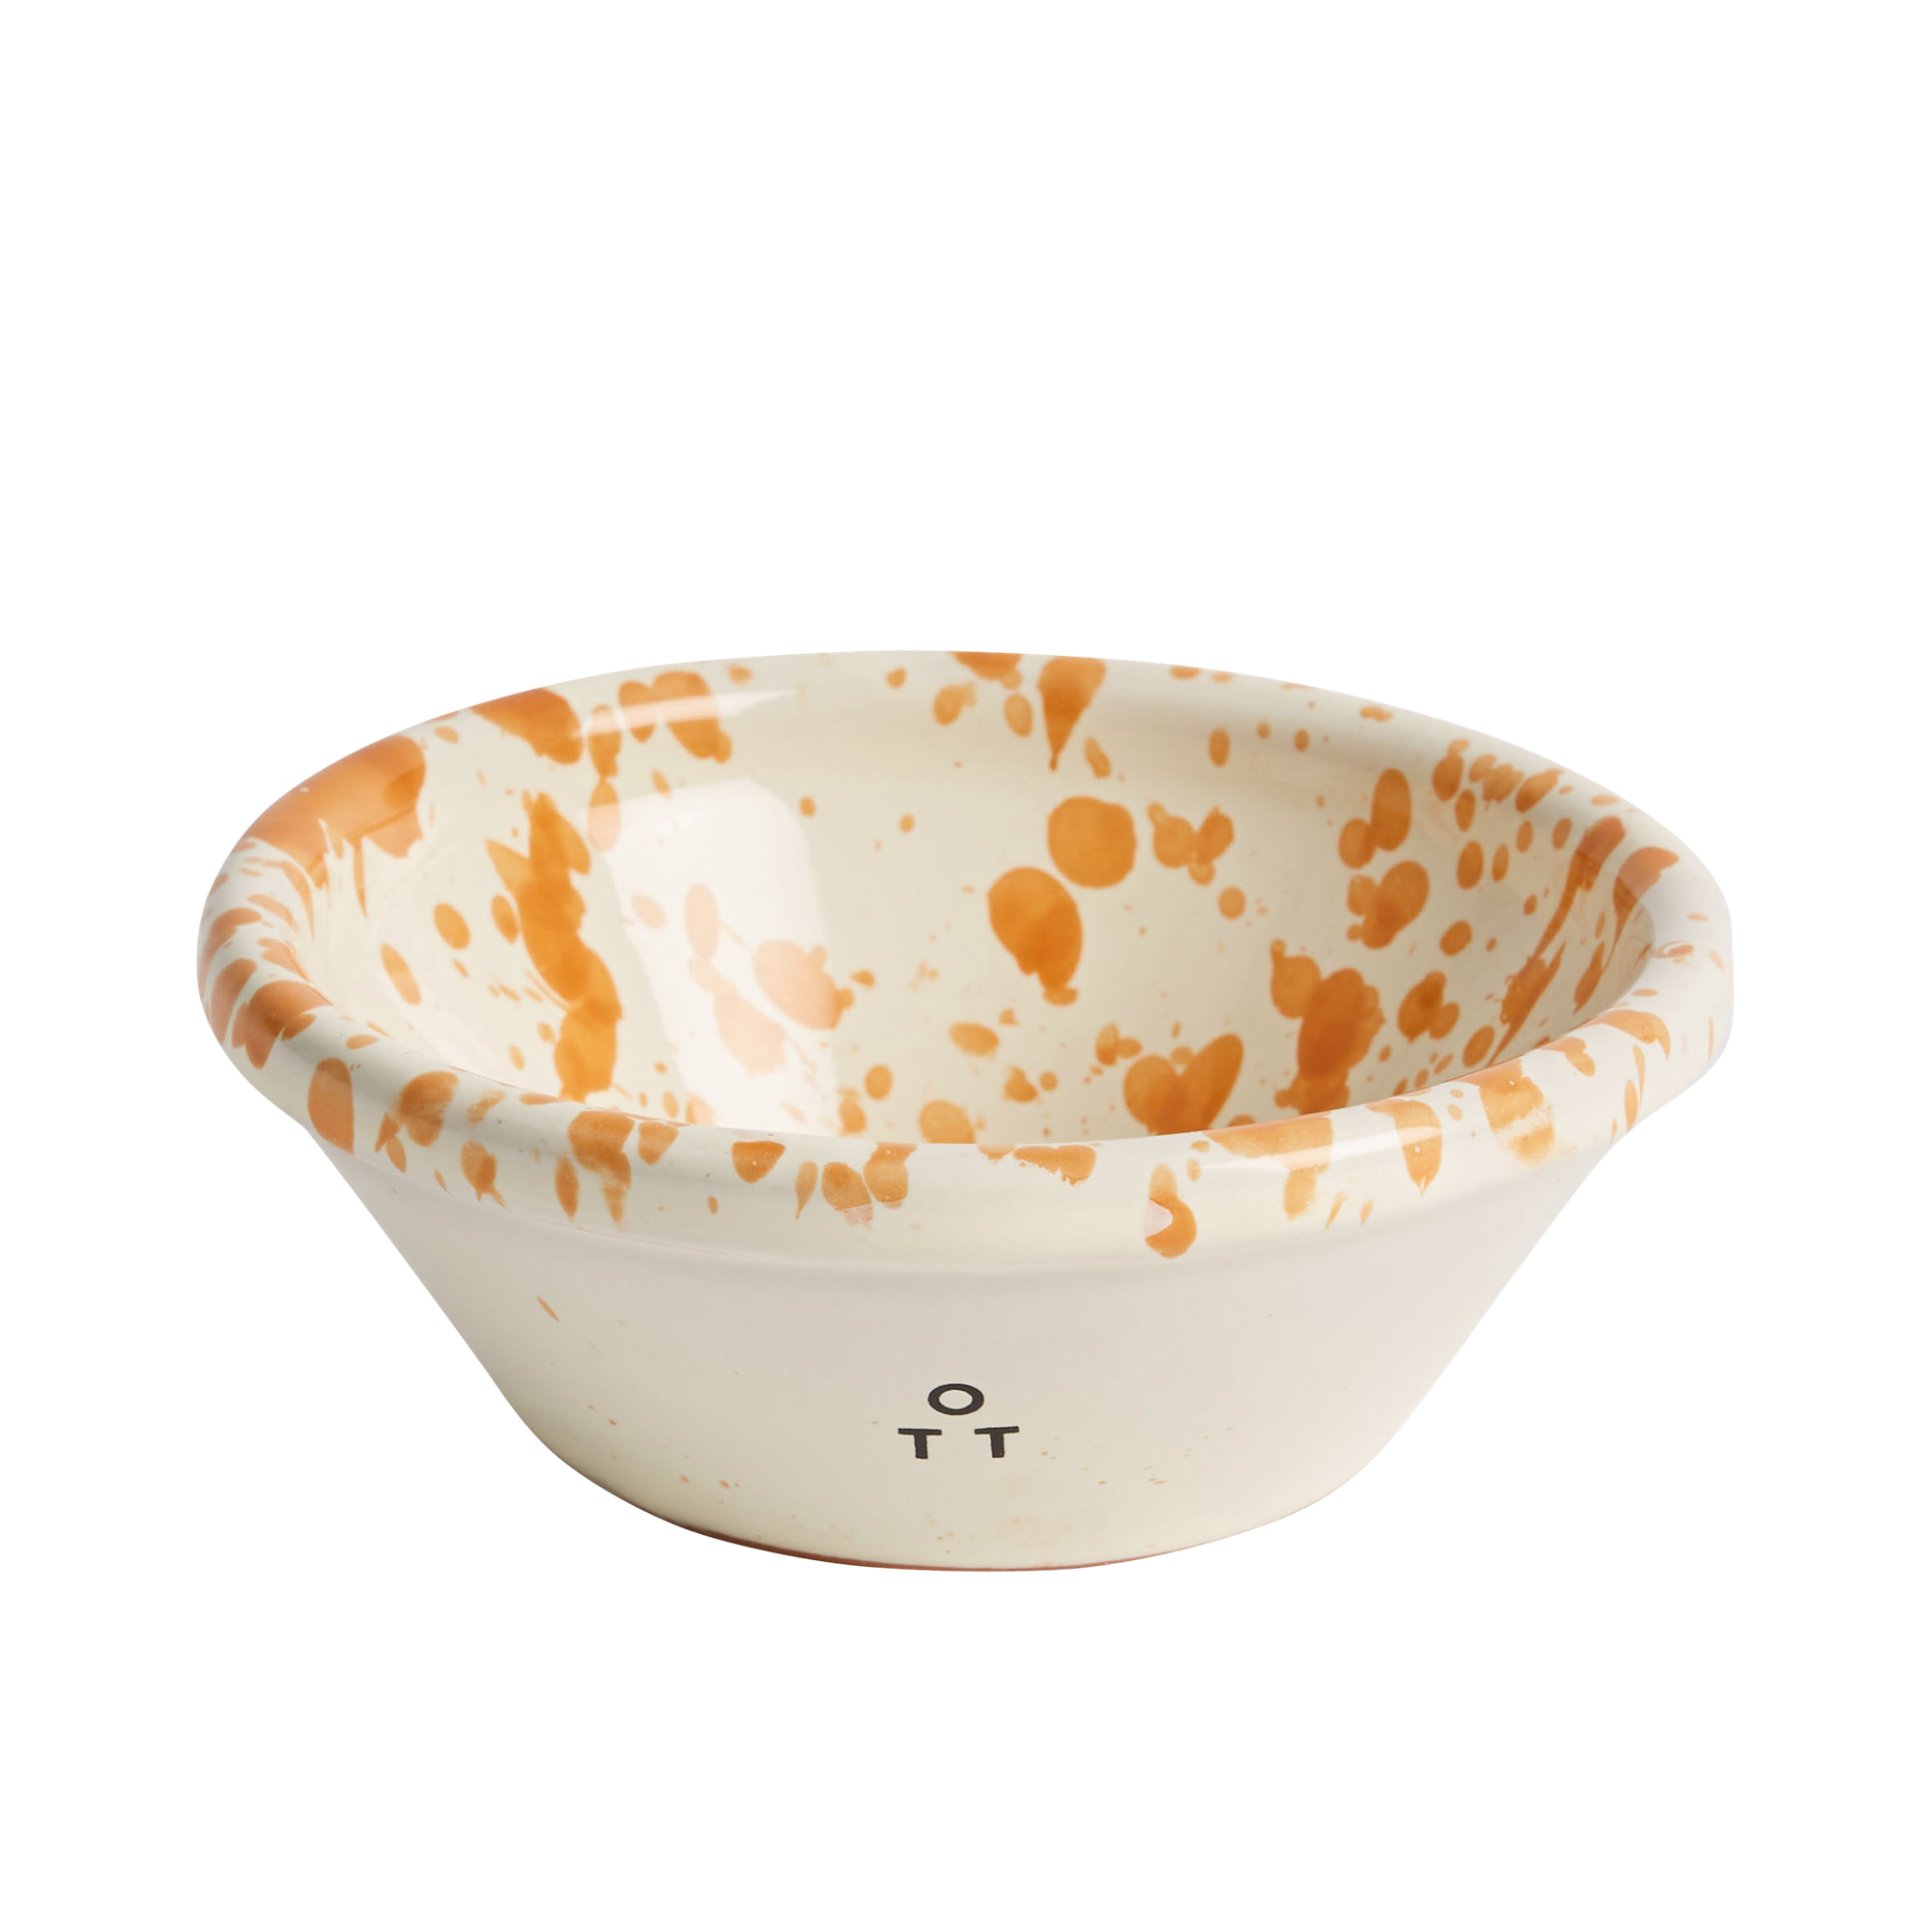 Hot Pottery nut bowl in burnt orange